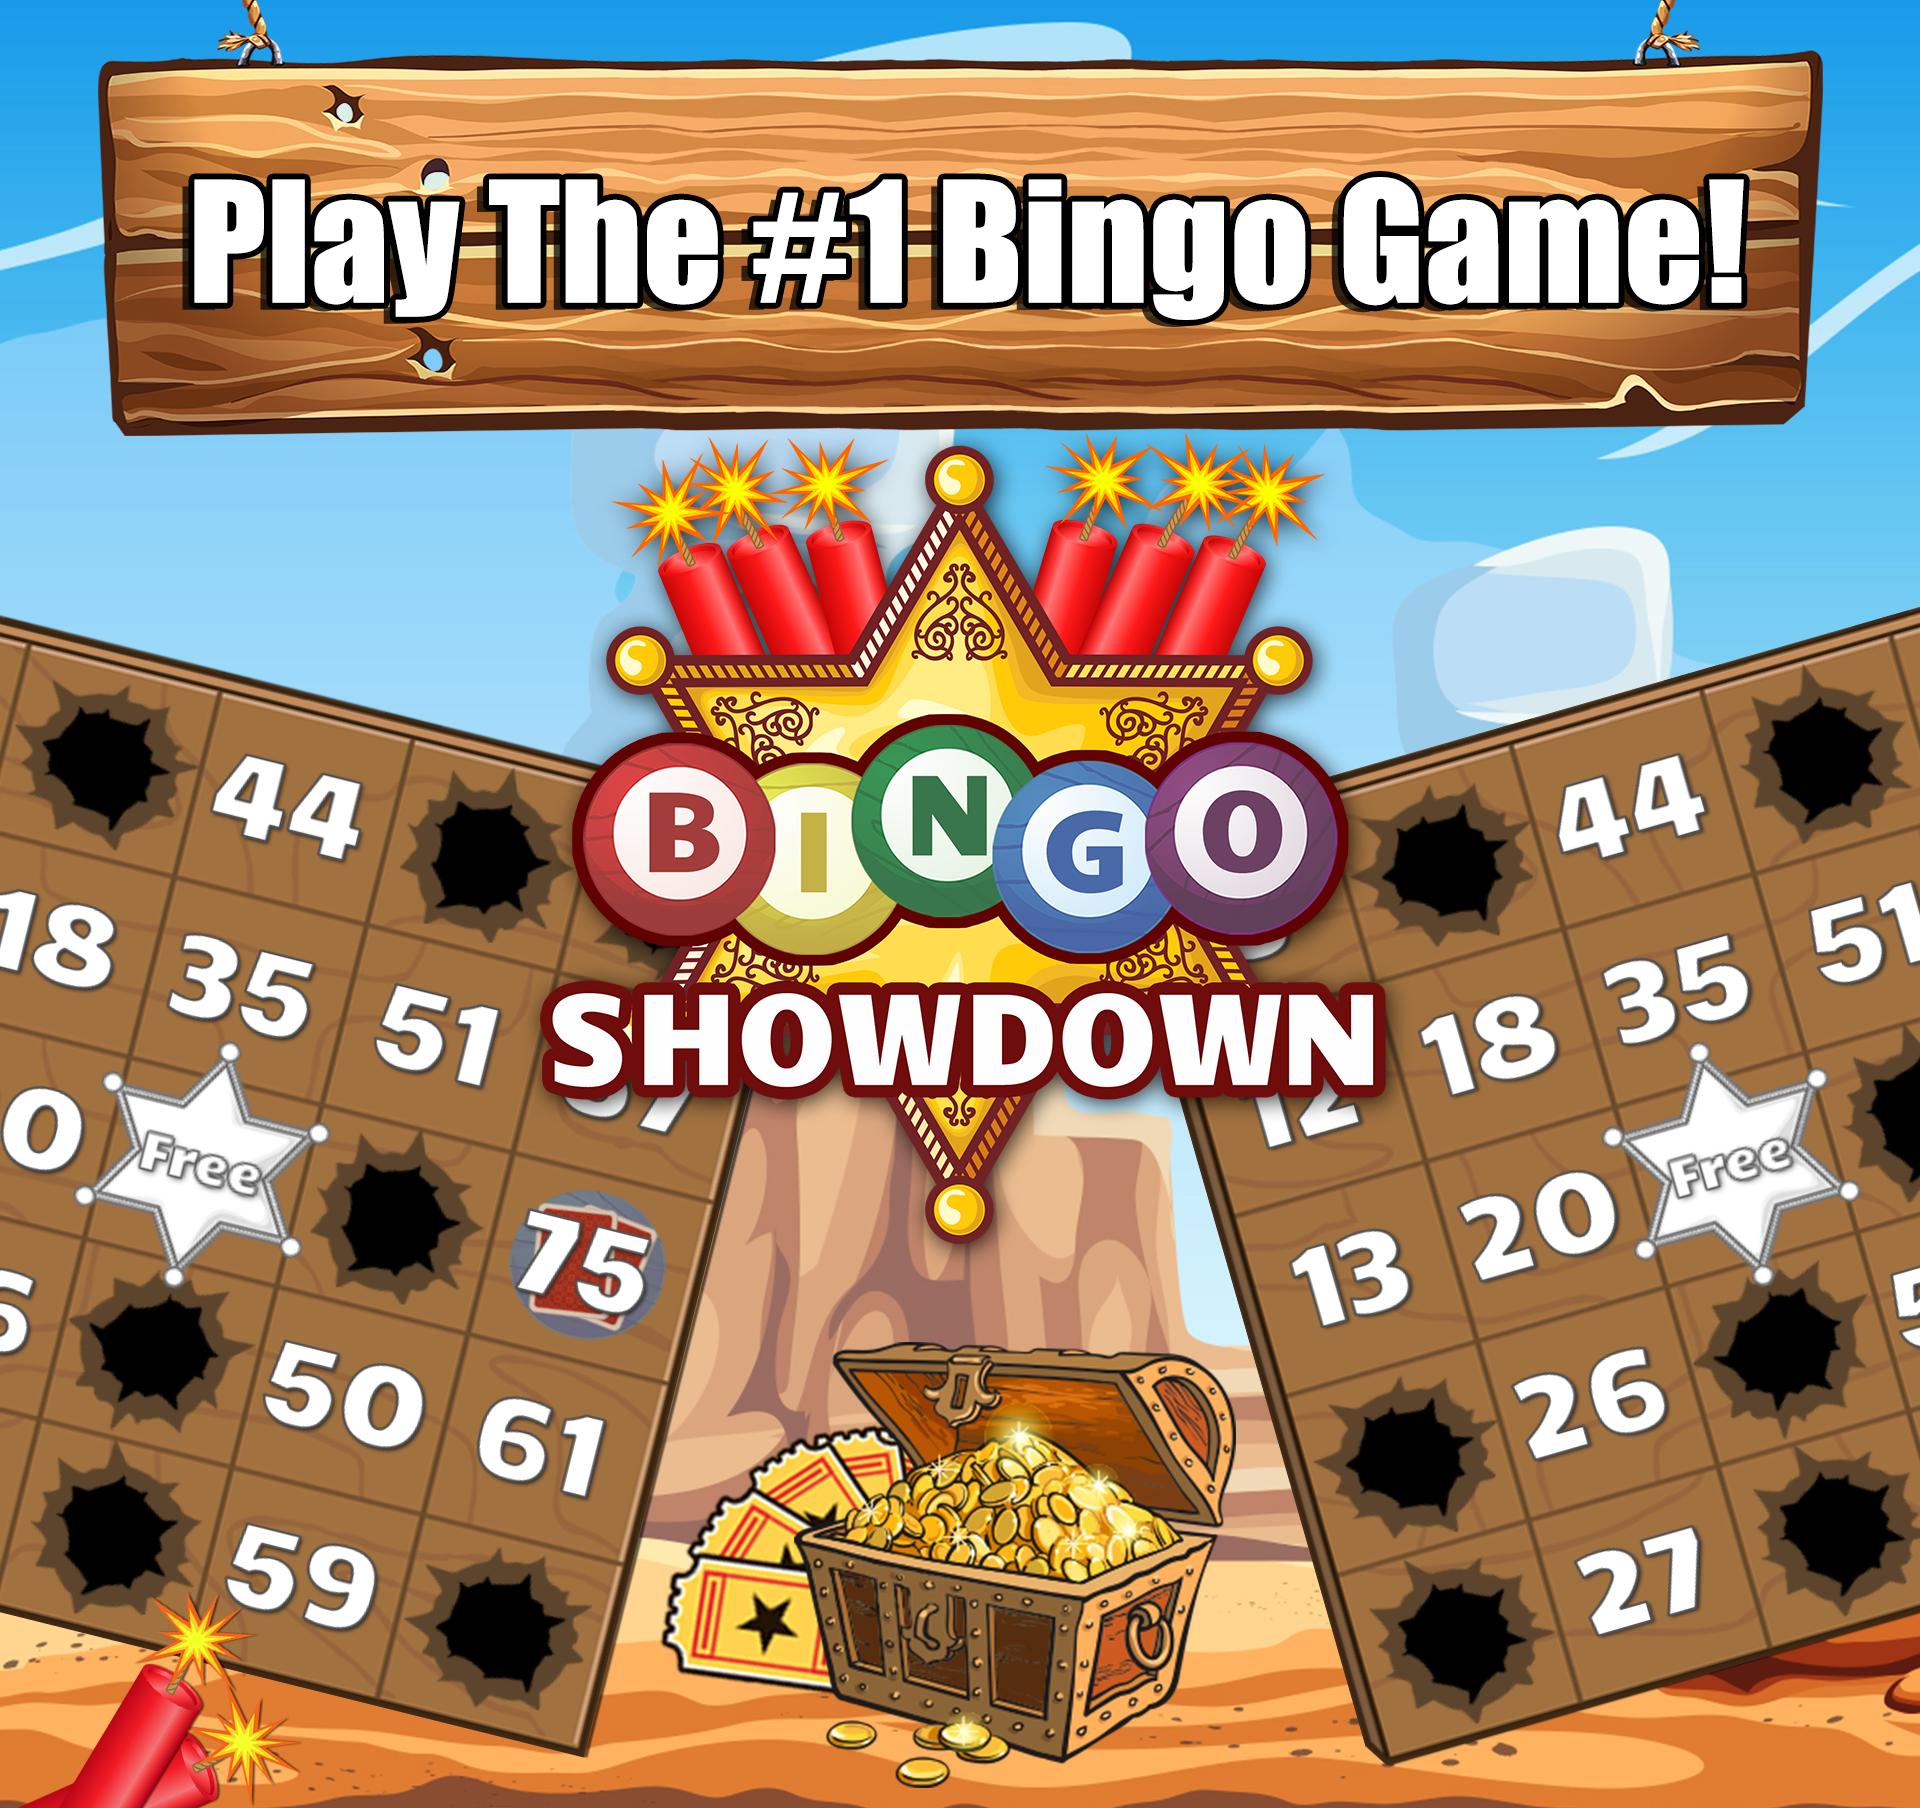 Bingo Showdown for Android - APK Download